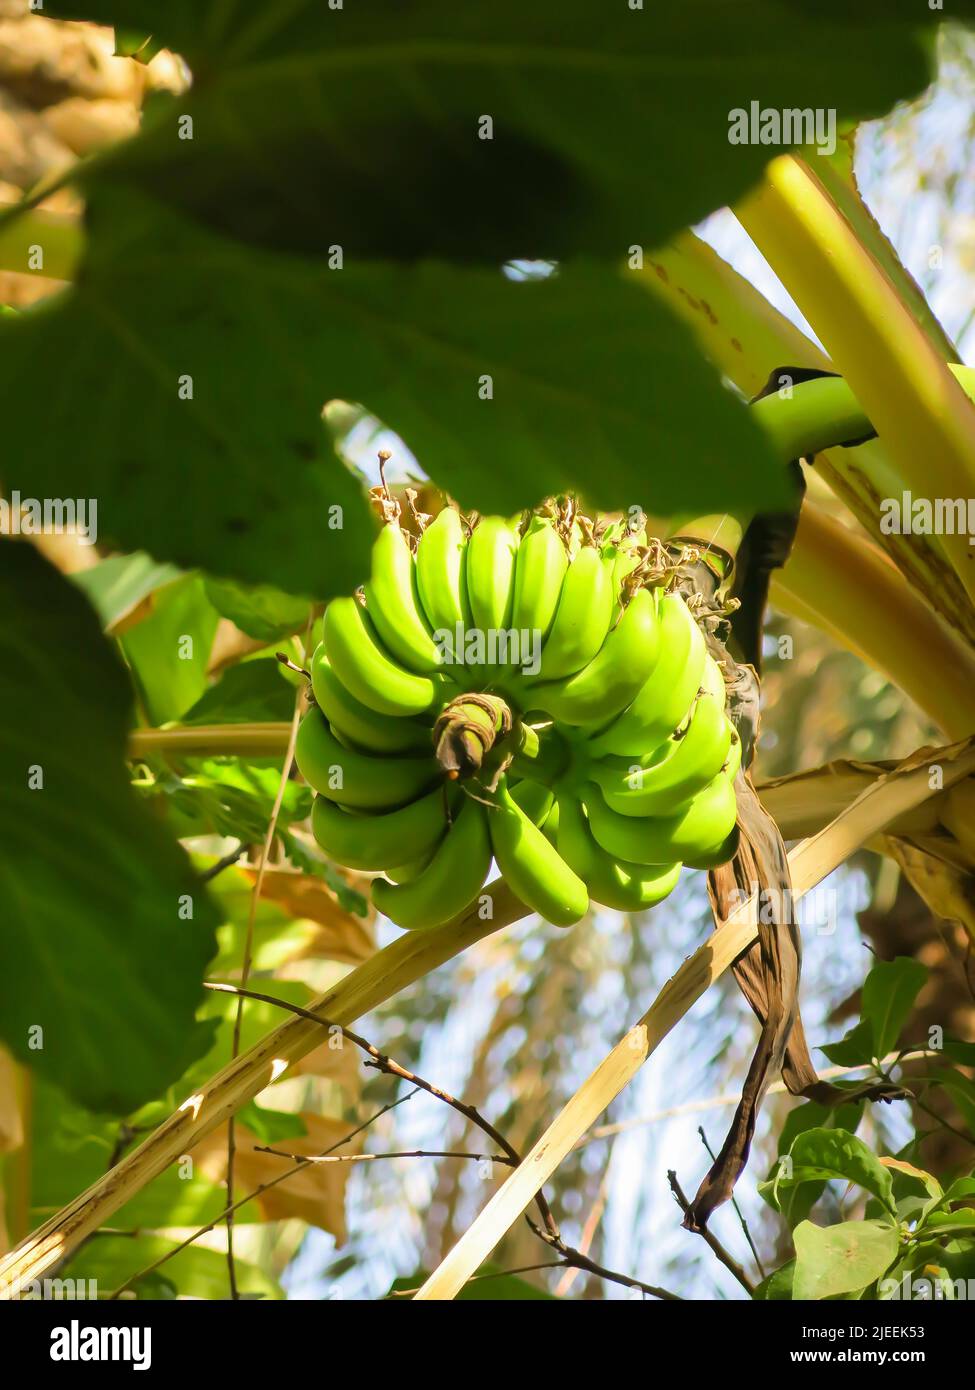 Bananas Growing on Tree Stock Photo